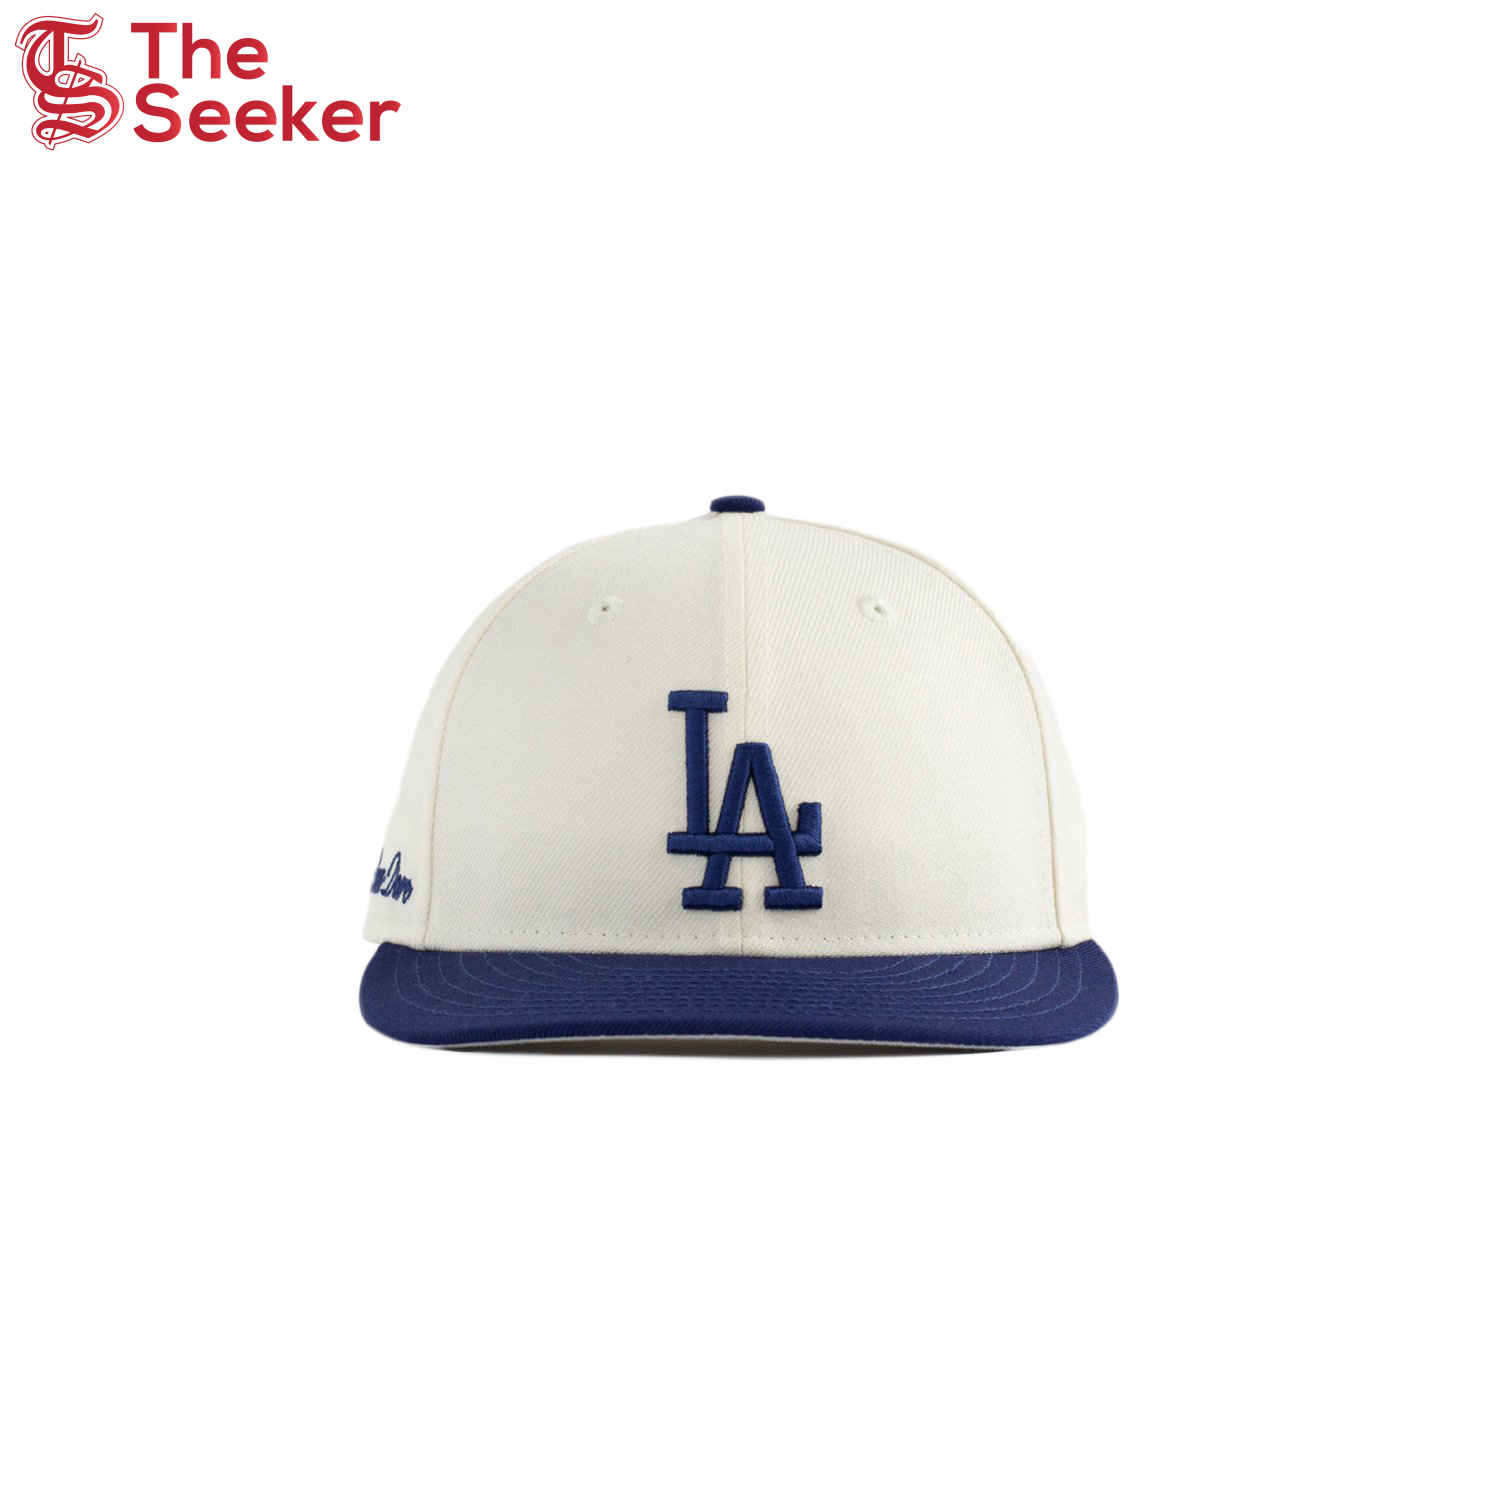 Aime Leon Dore x New Era Dodgers Hat Ivory/Blue